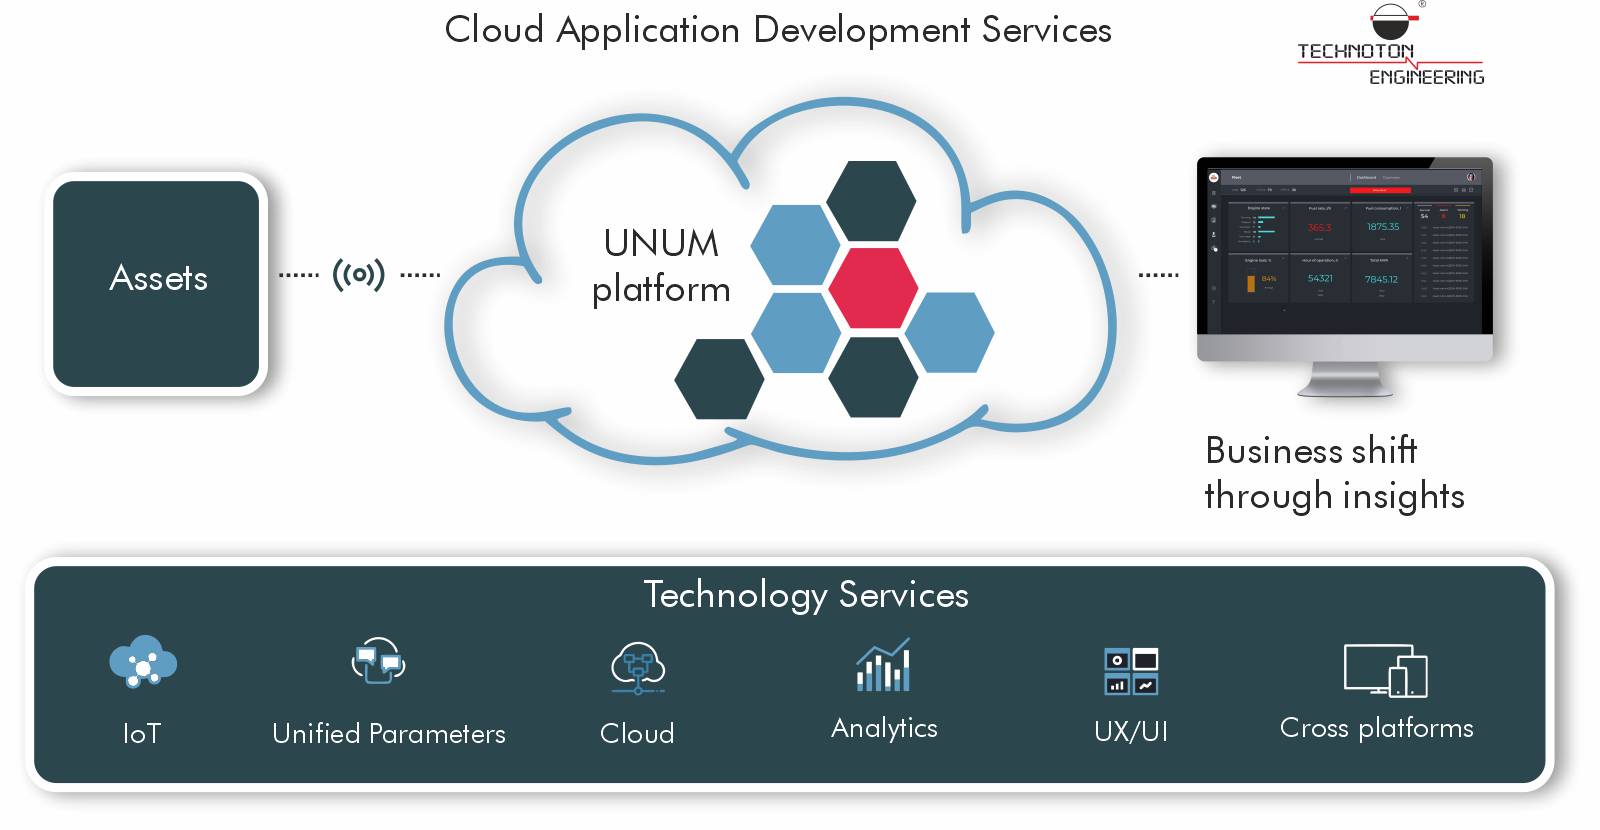 Cloud application development